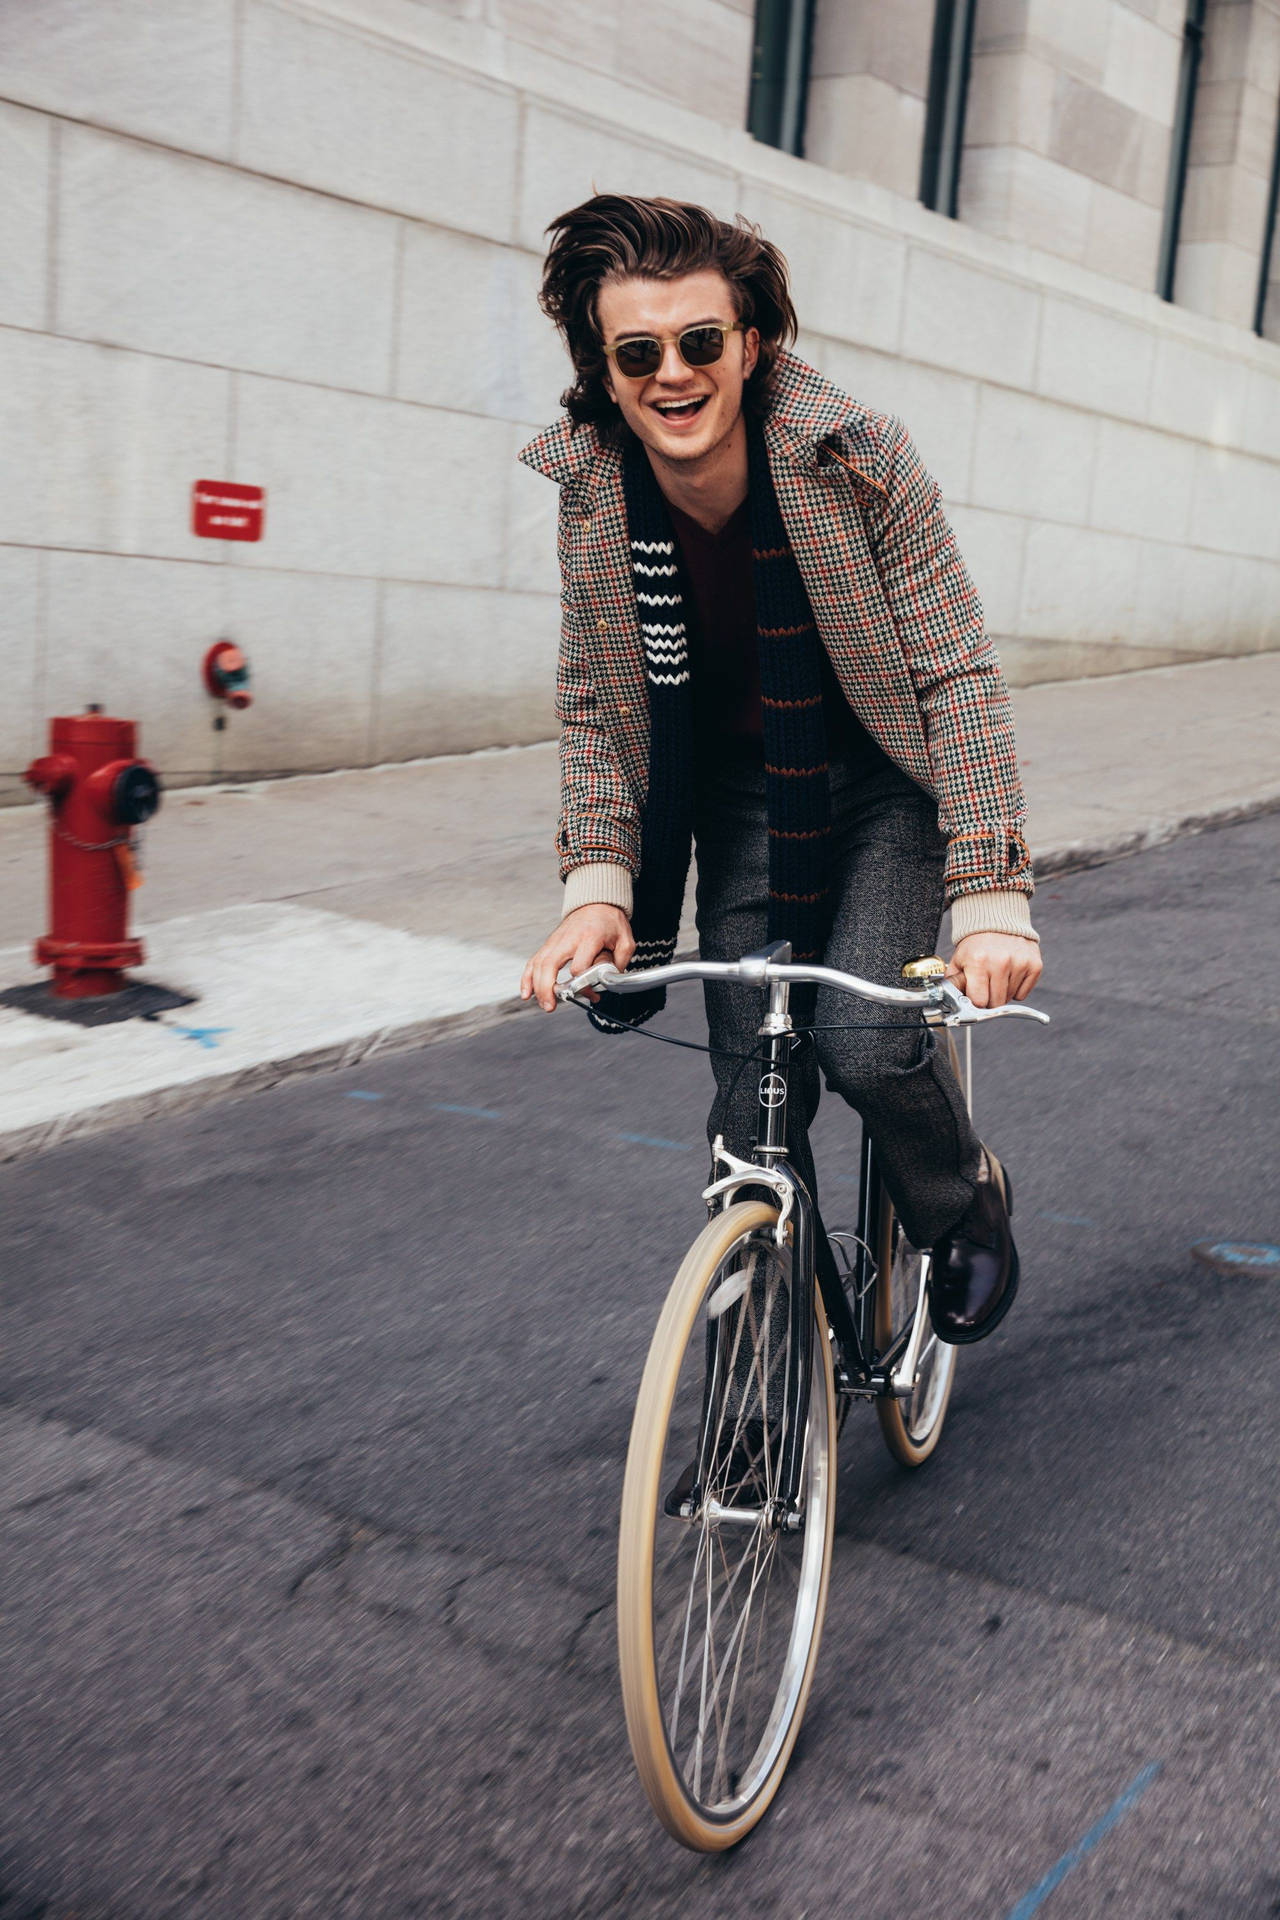 Joe Keery Riding a Bike Wallpaper